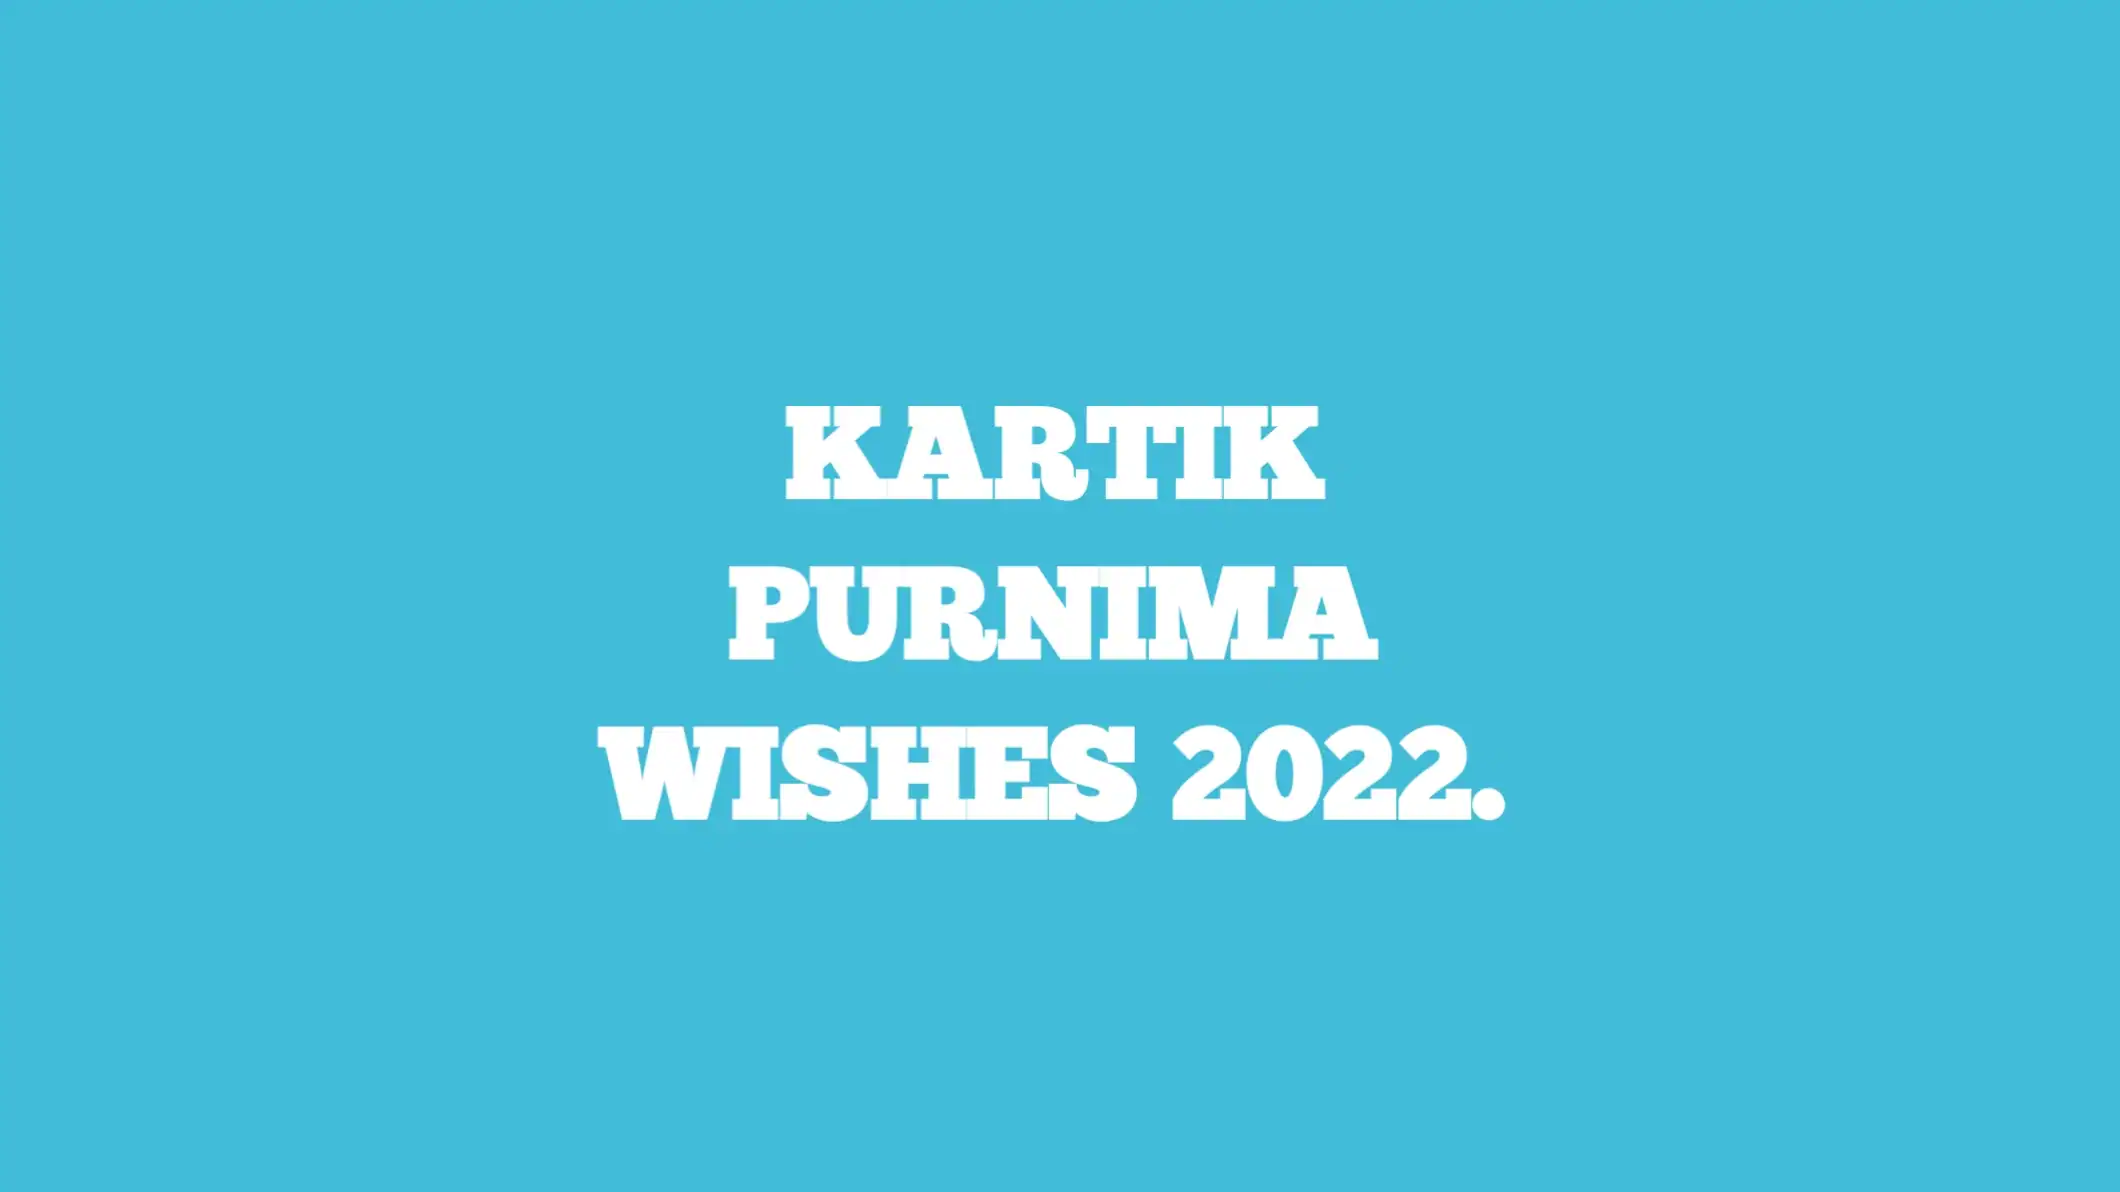 Kartik Purnima wishes 2022